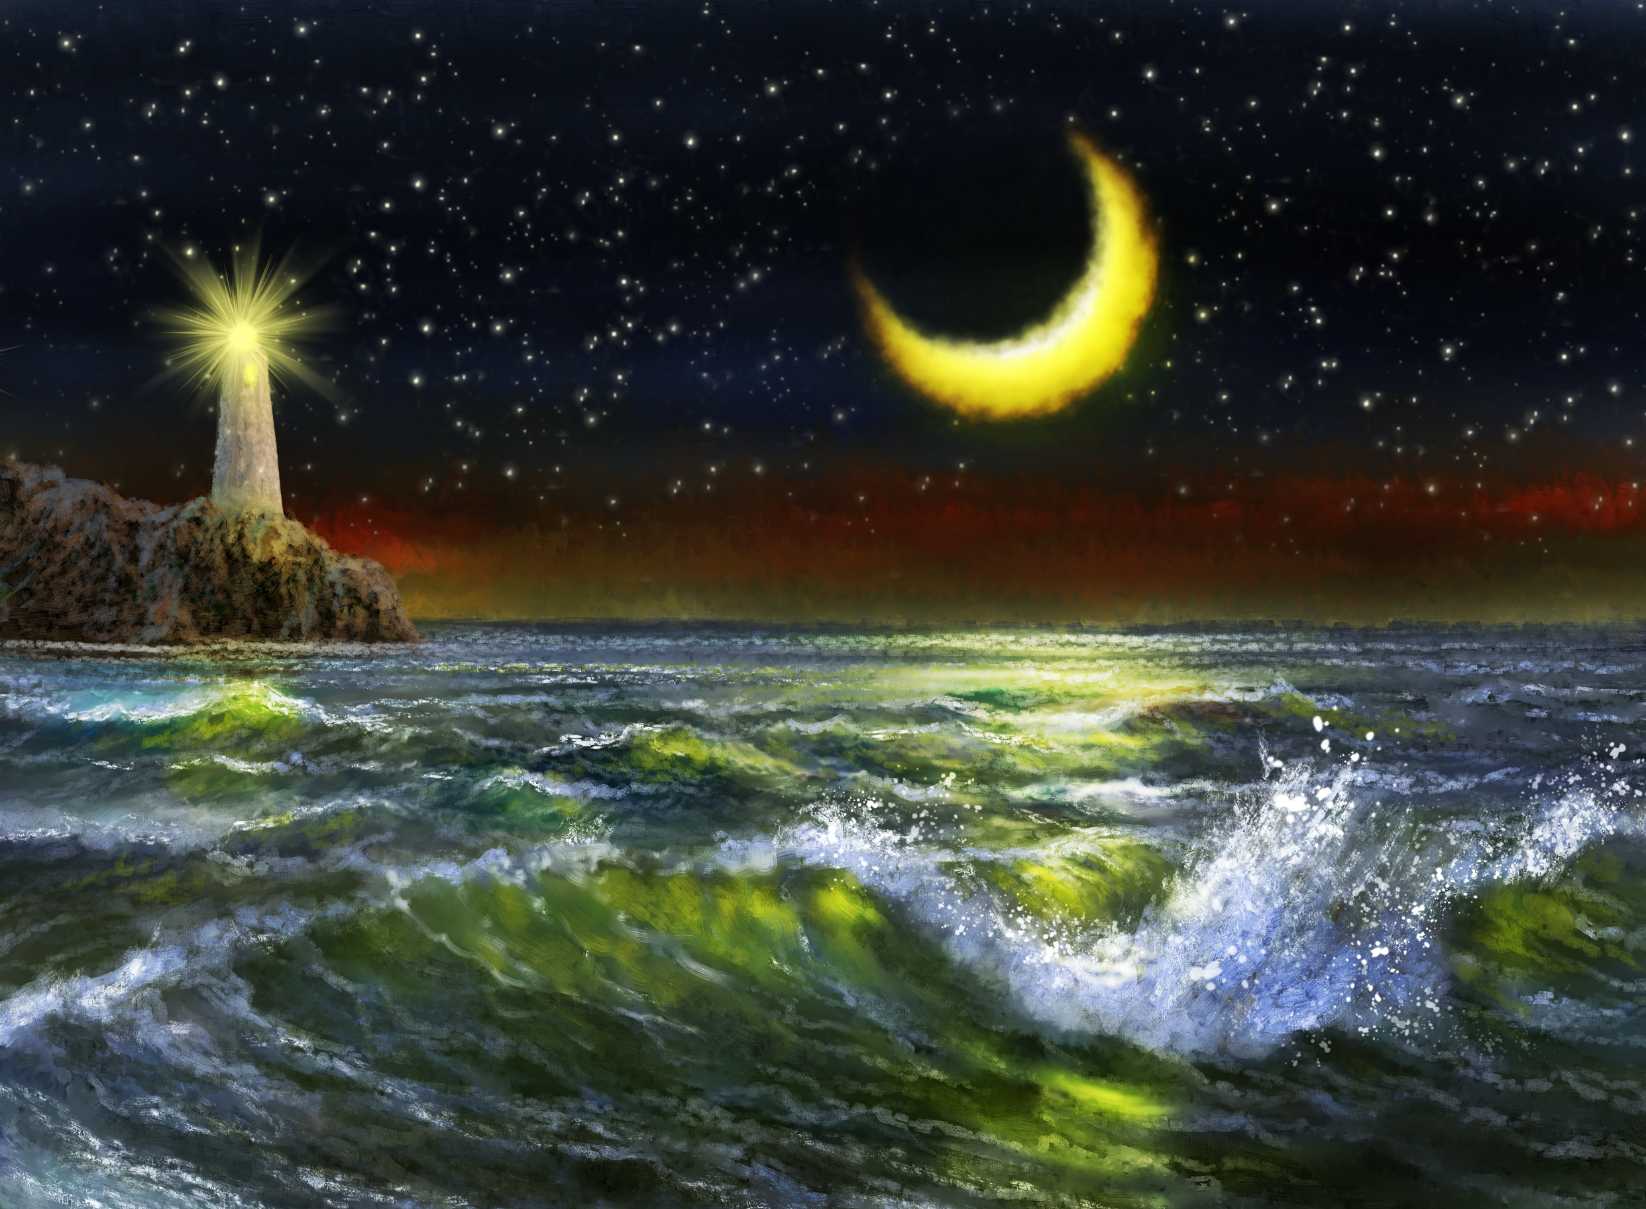 Starry night in the ocean